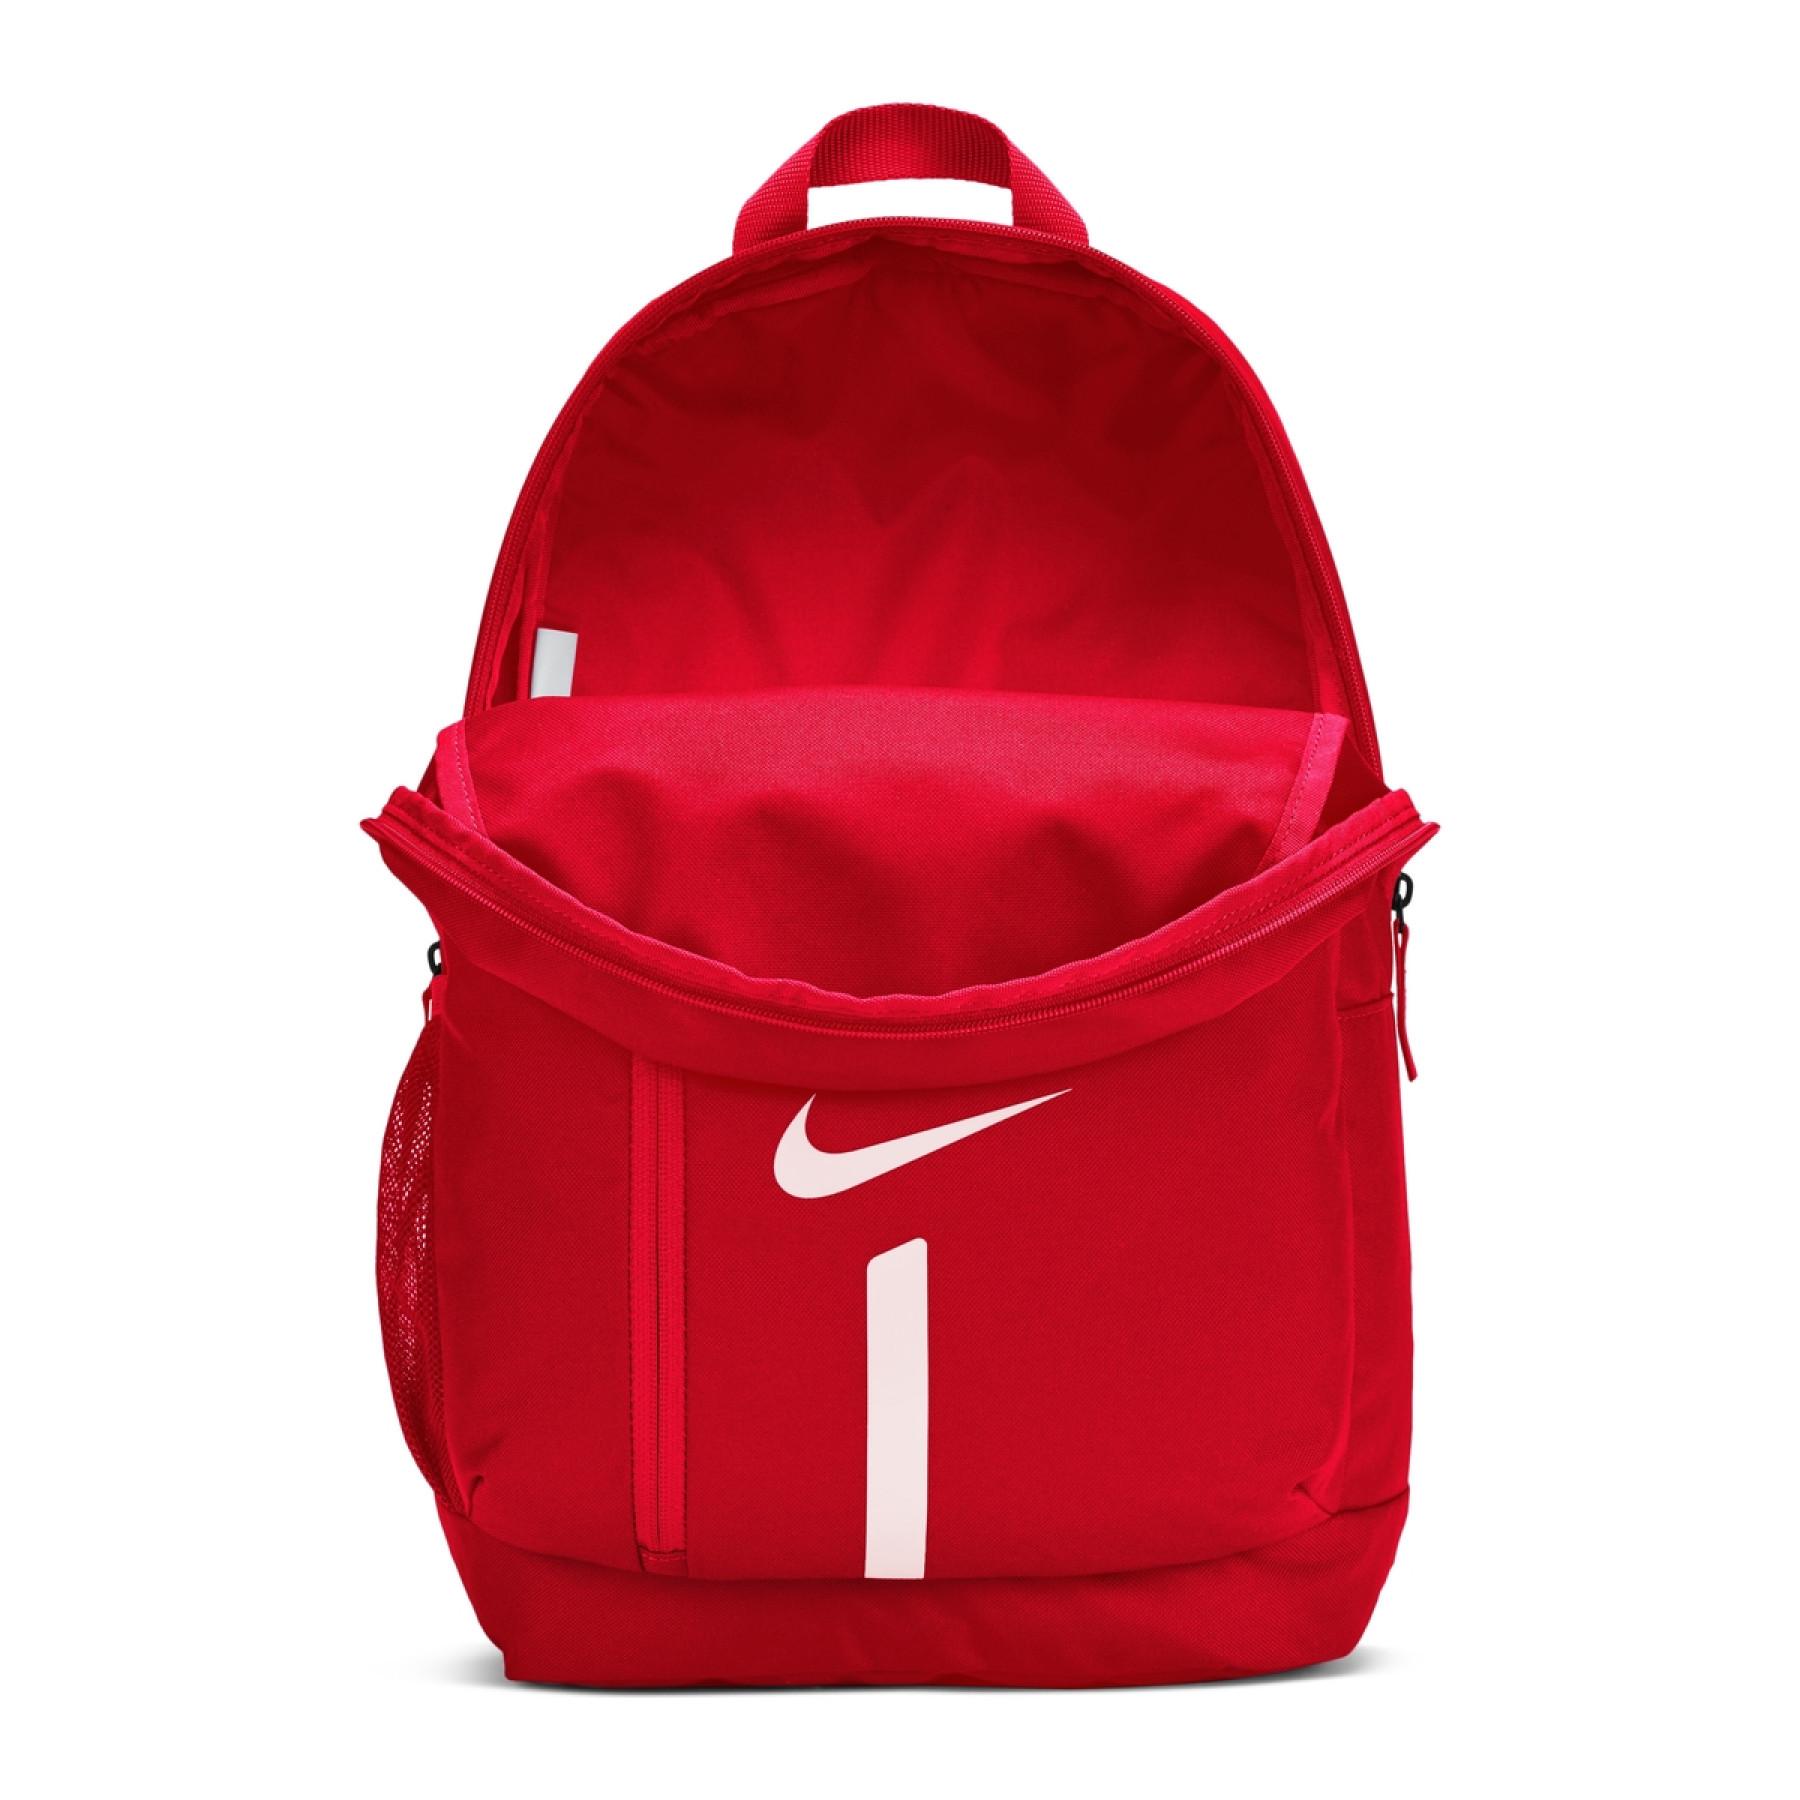 Children's backpack Nike Academy Team